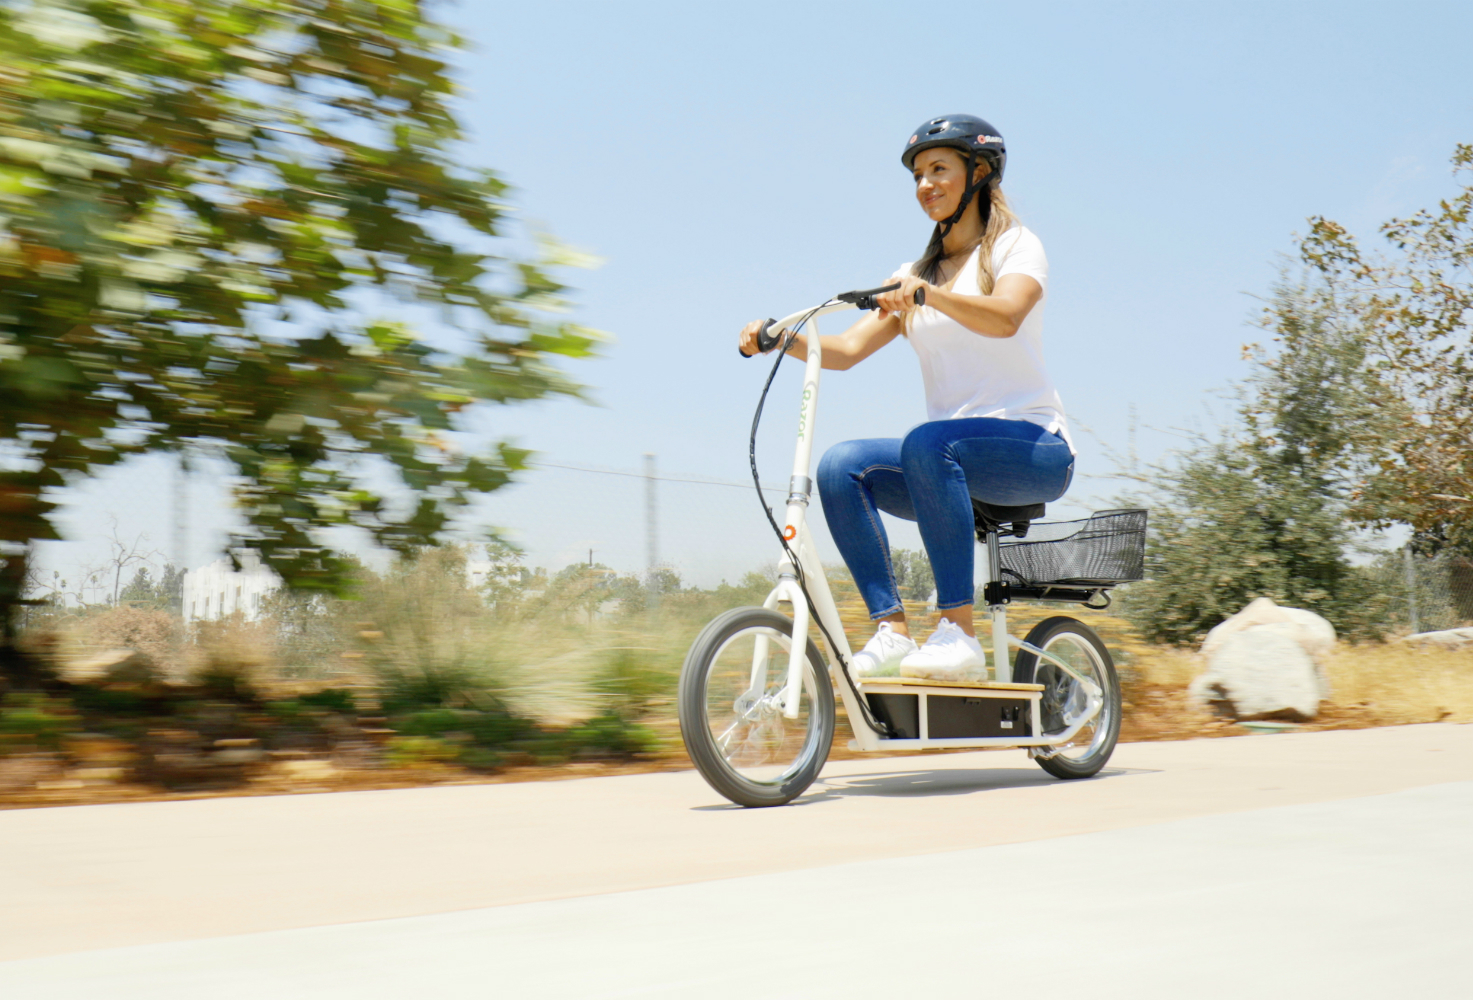 walmart slashes prices on hyper e ride electric hybrid bikes razor 36 volt ecosmart metro scooter 1